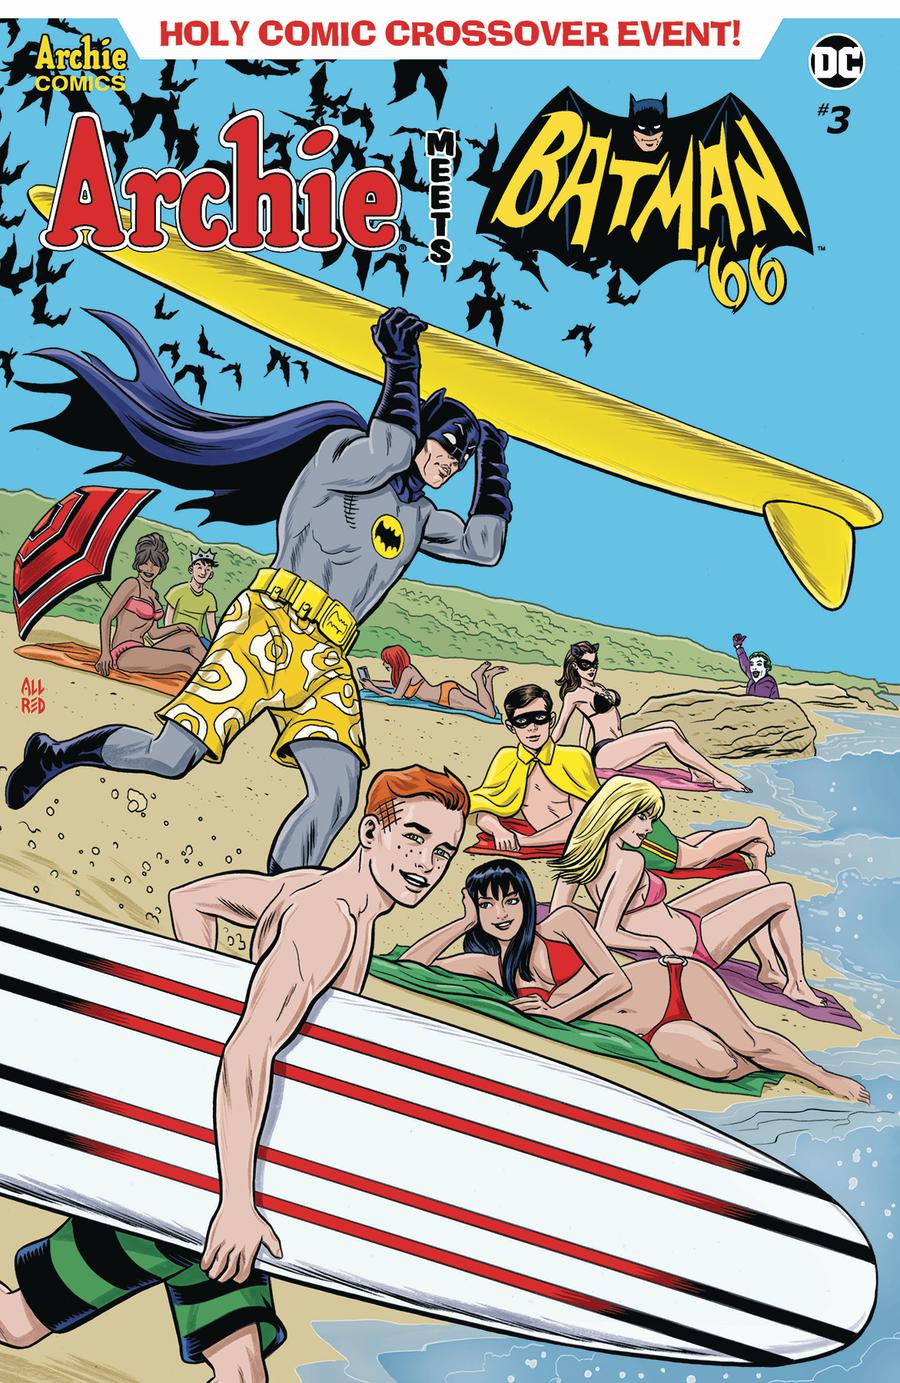 Archie Meets Batman 66 #3 Cover A Regular Michael Allred & Laura Allred Cover